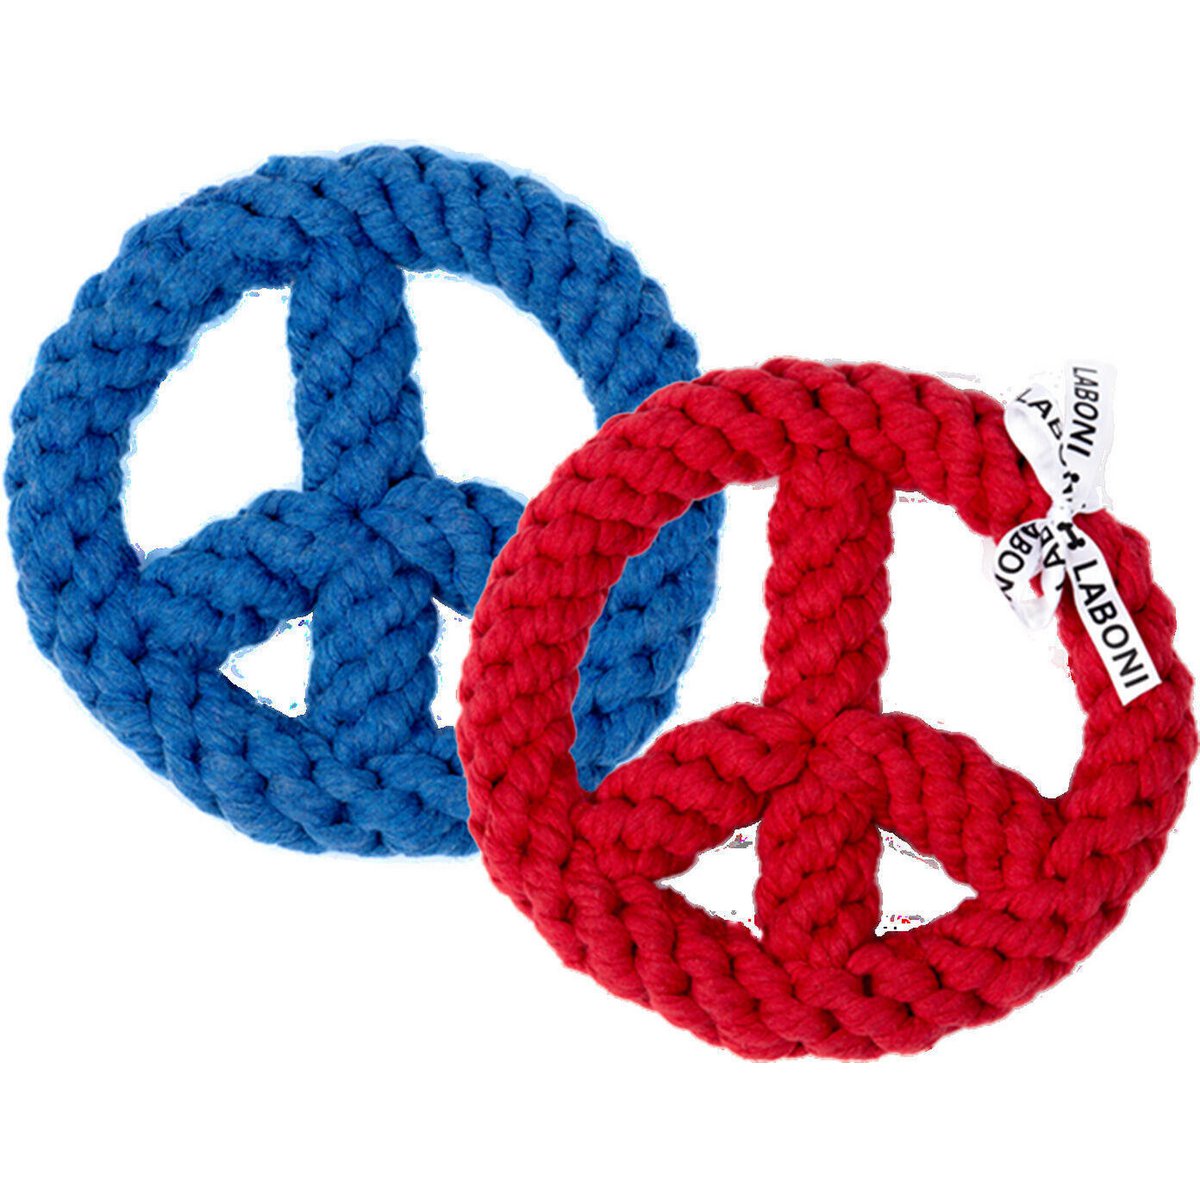 Paulchen Peace Rope Toy - Dog Blue 17x17x3 cm